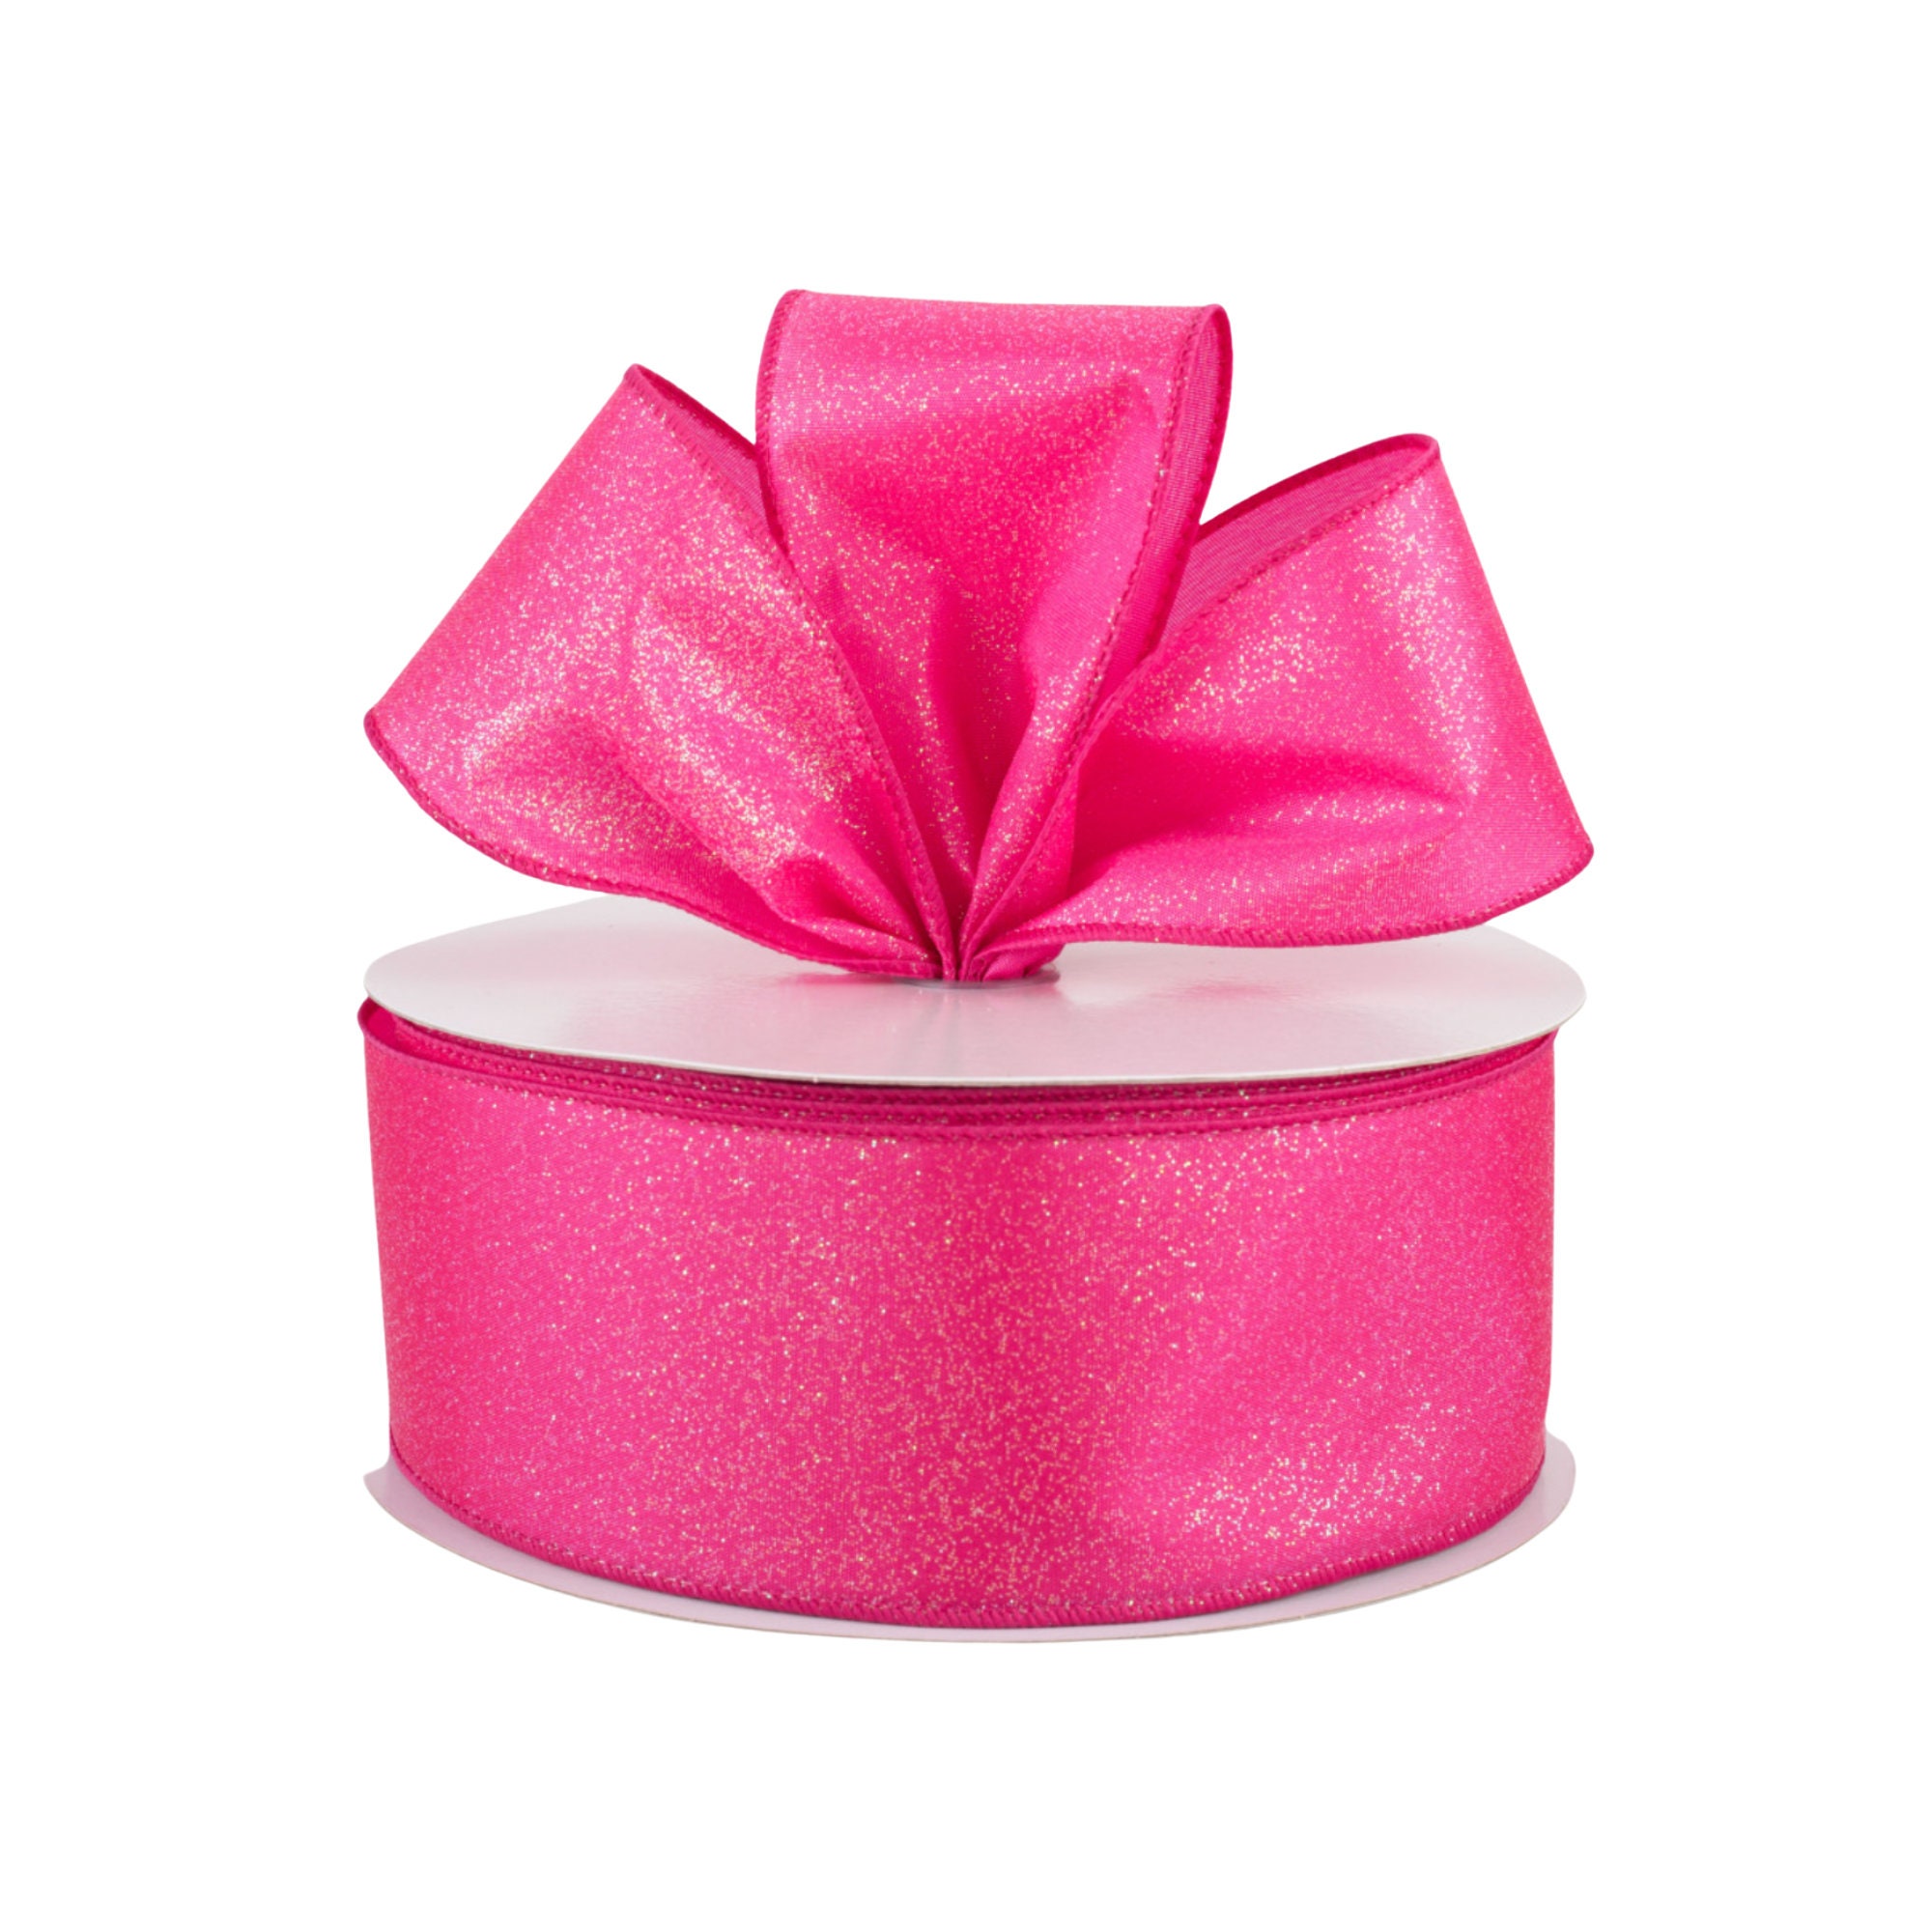 Hot Pink Velvet Ribbon With Bright Plaid Back